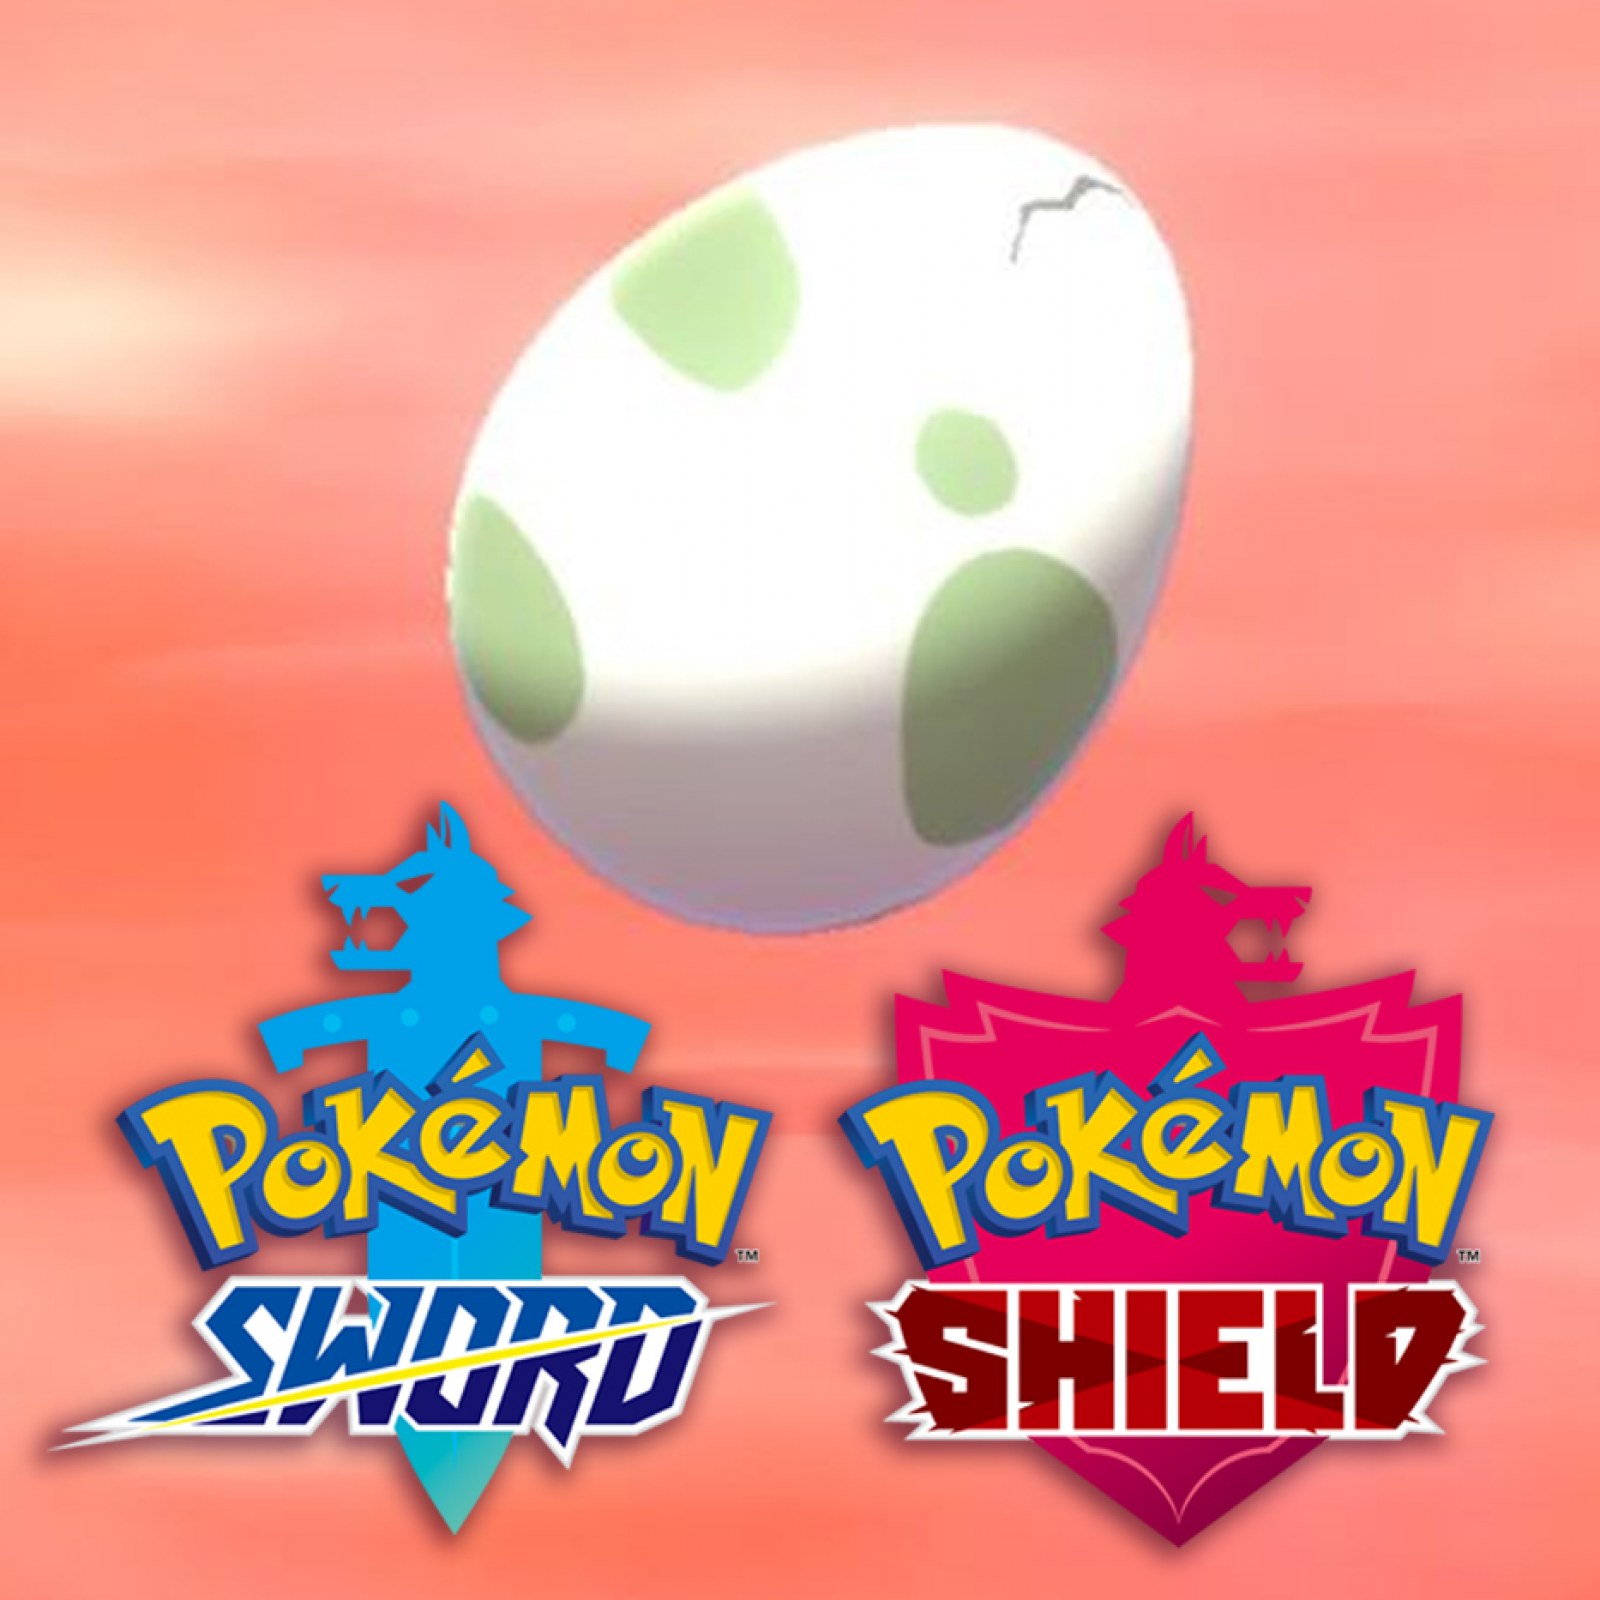 Pokémon Sword & Shield: Daycares And Breeding Guide